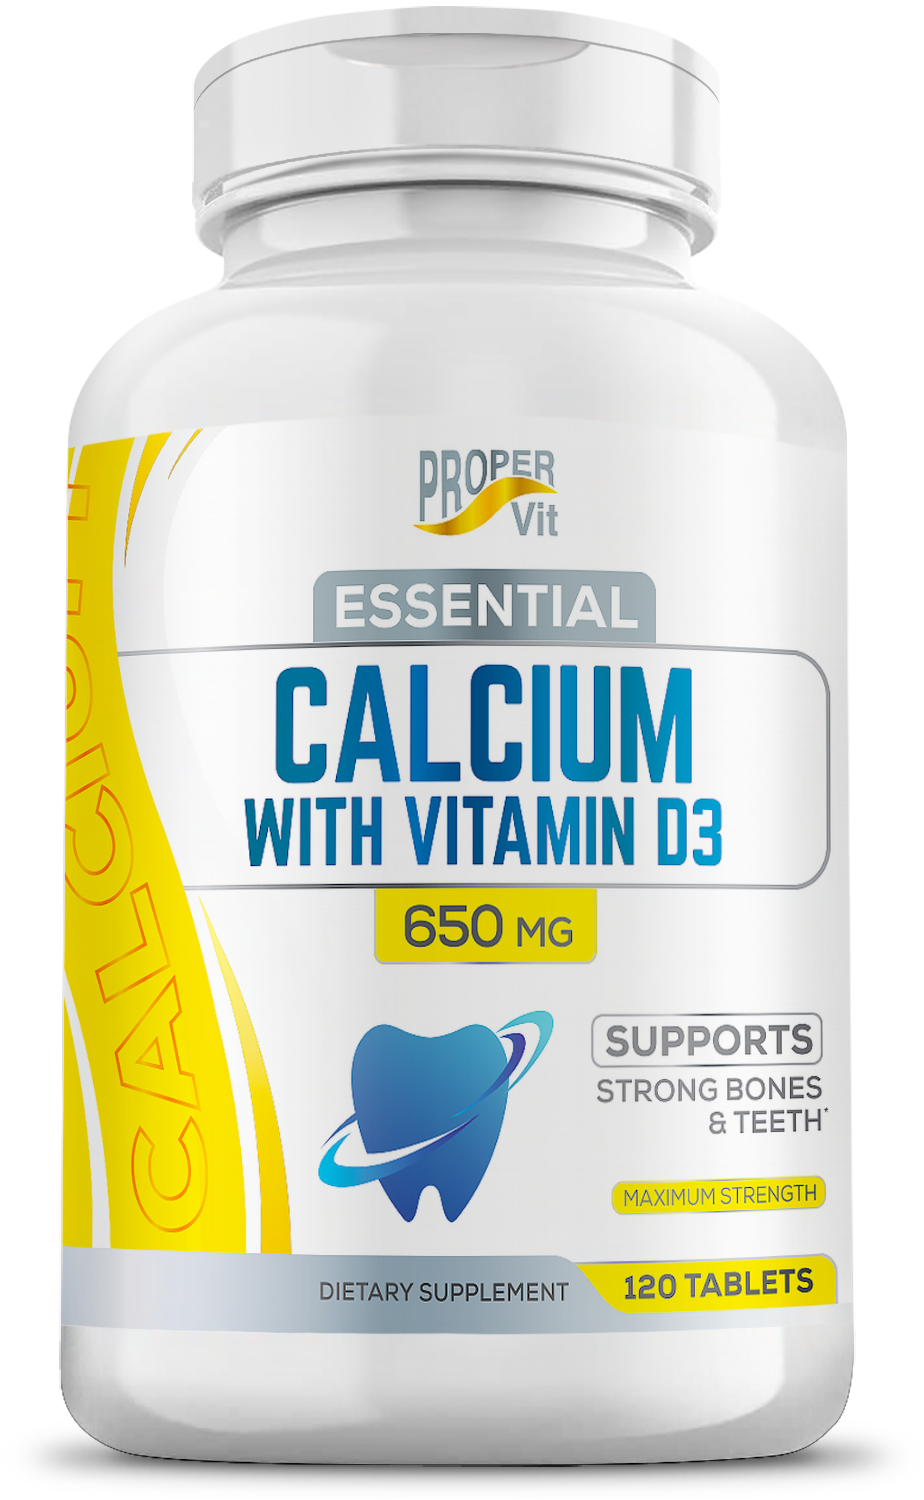 Proper Vit Essential Calcium 650mg with Vitamin D3 (120 табл.)